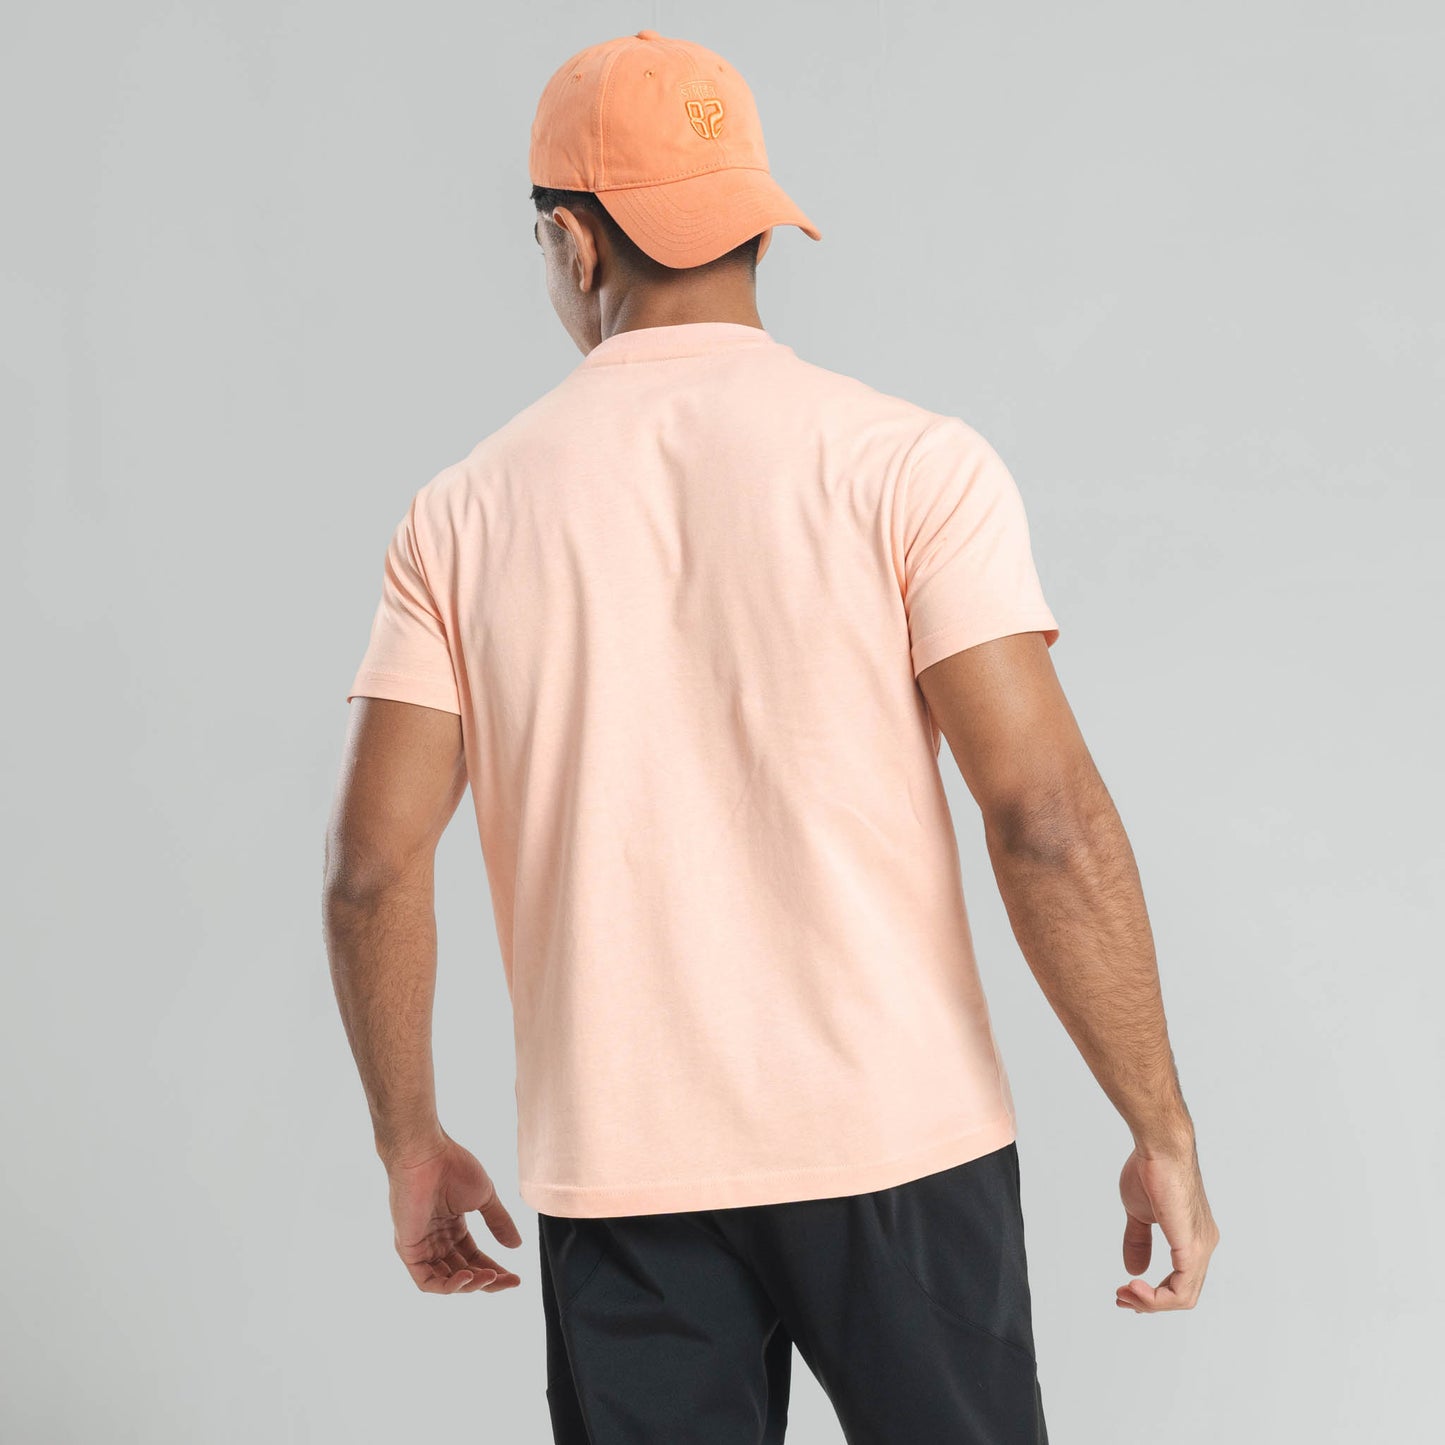 Plain Light Salmon Pink crew neck essential t-shirt